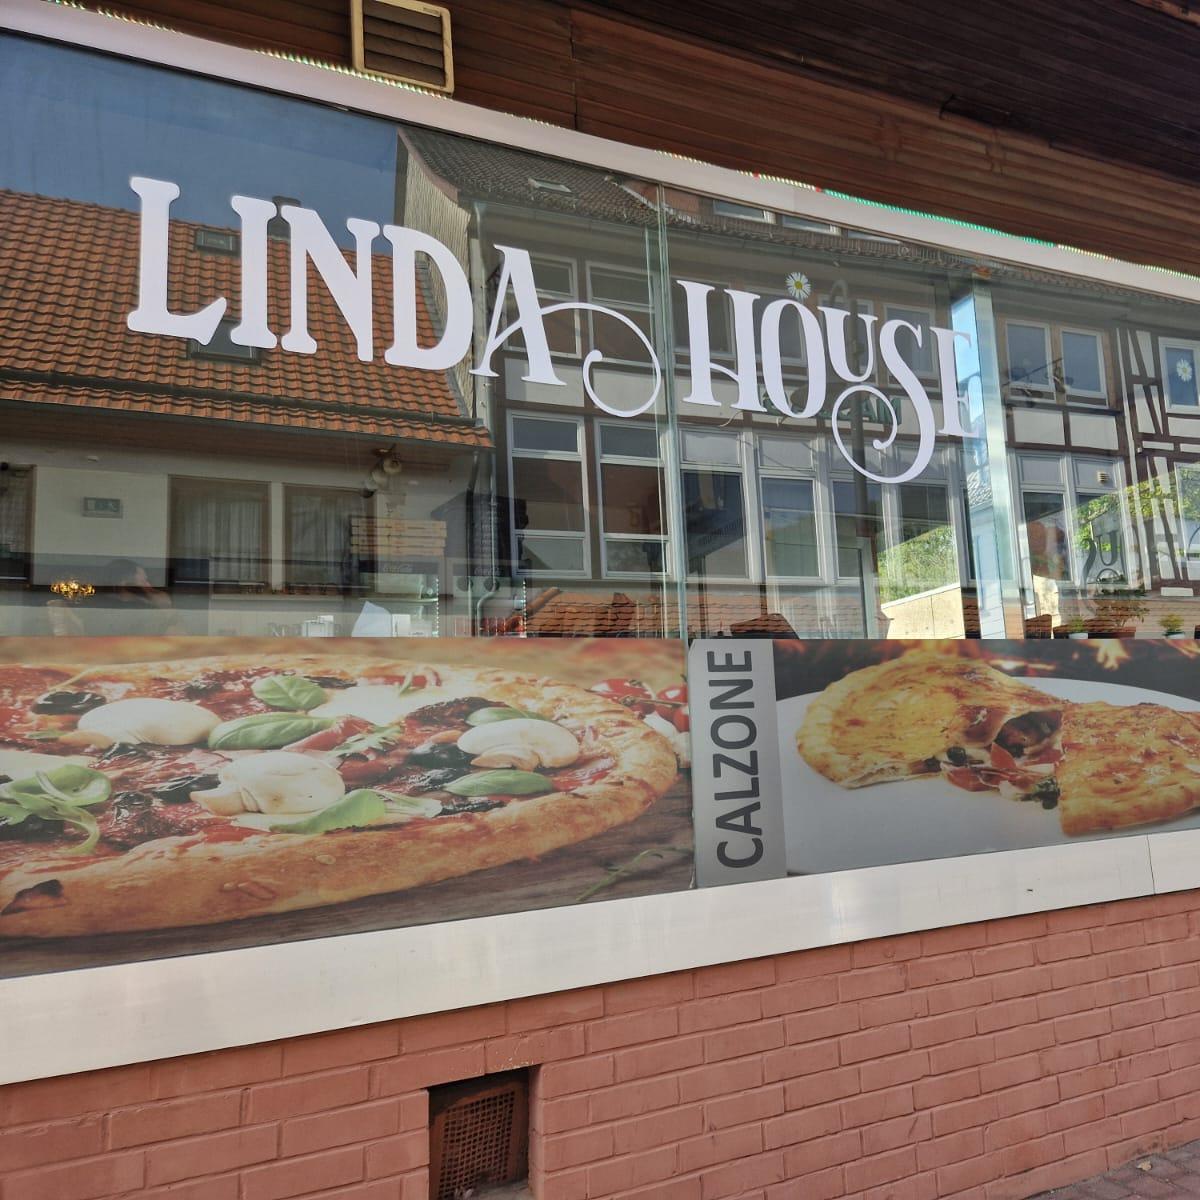 Restaurant "Linda House" in Adelebsen